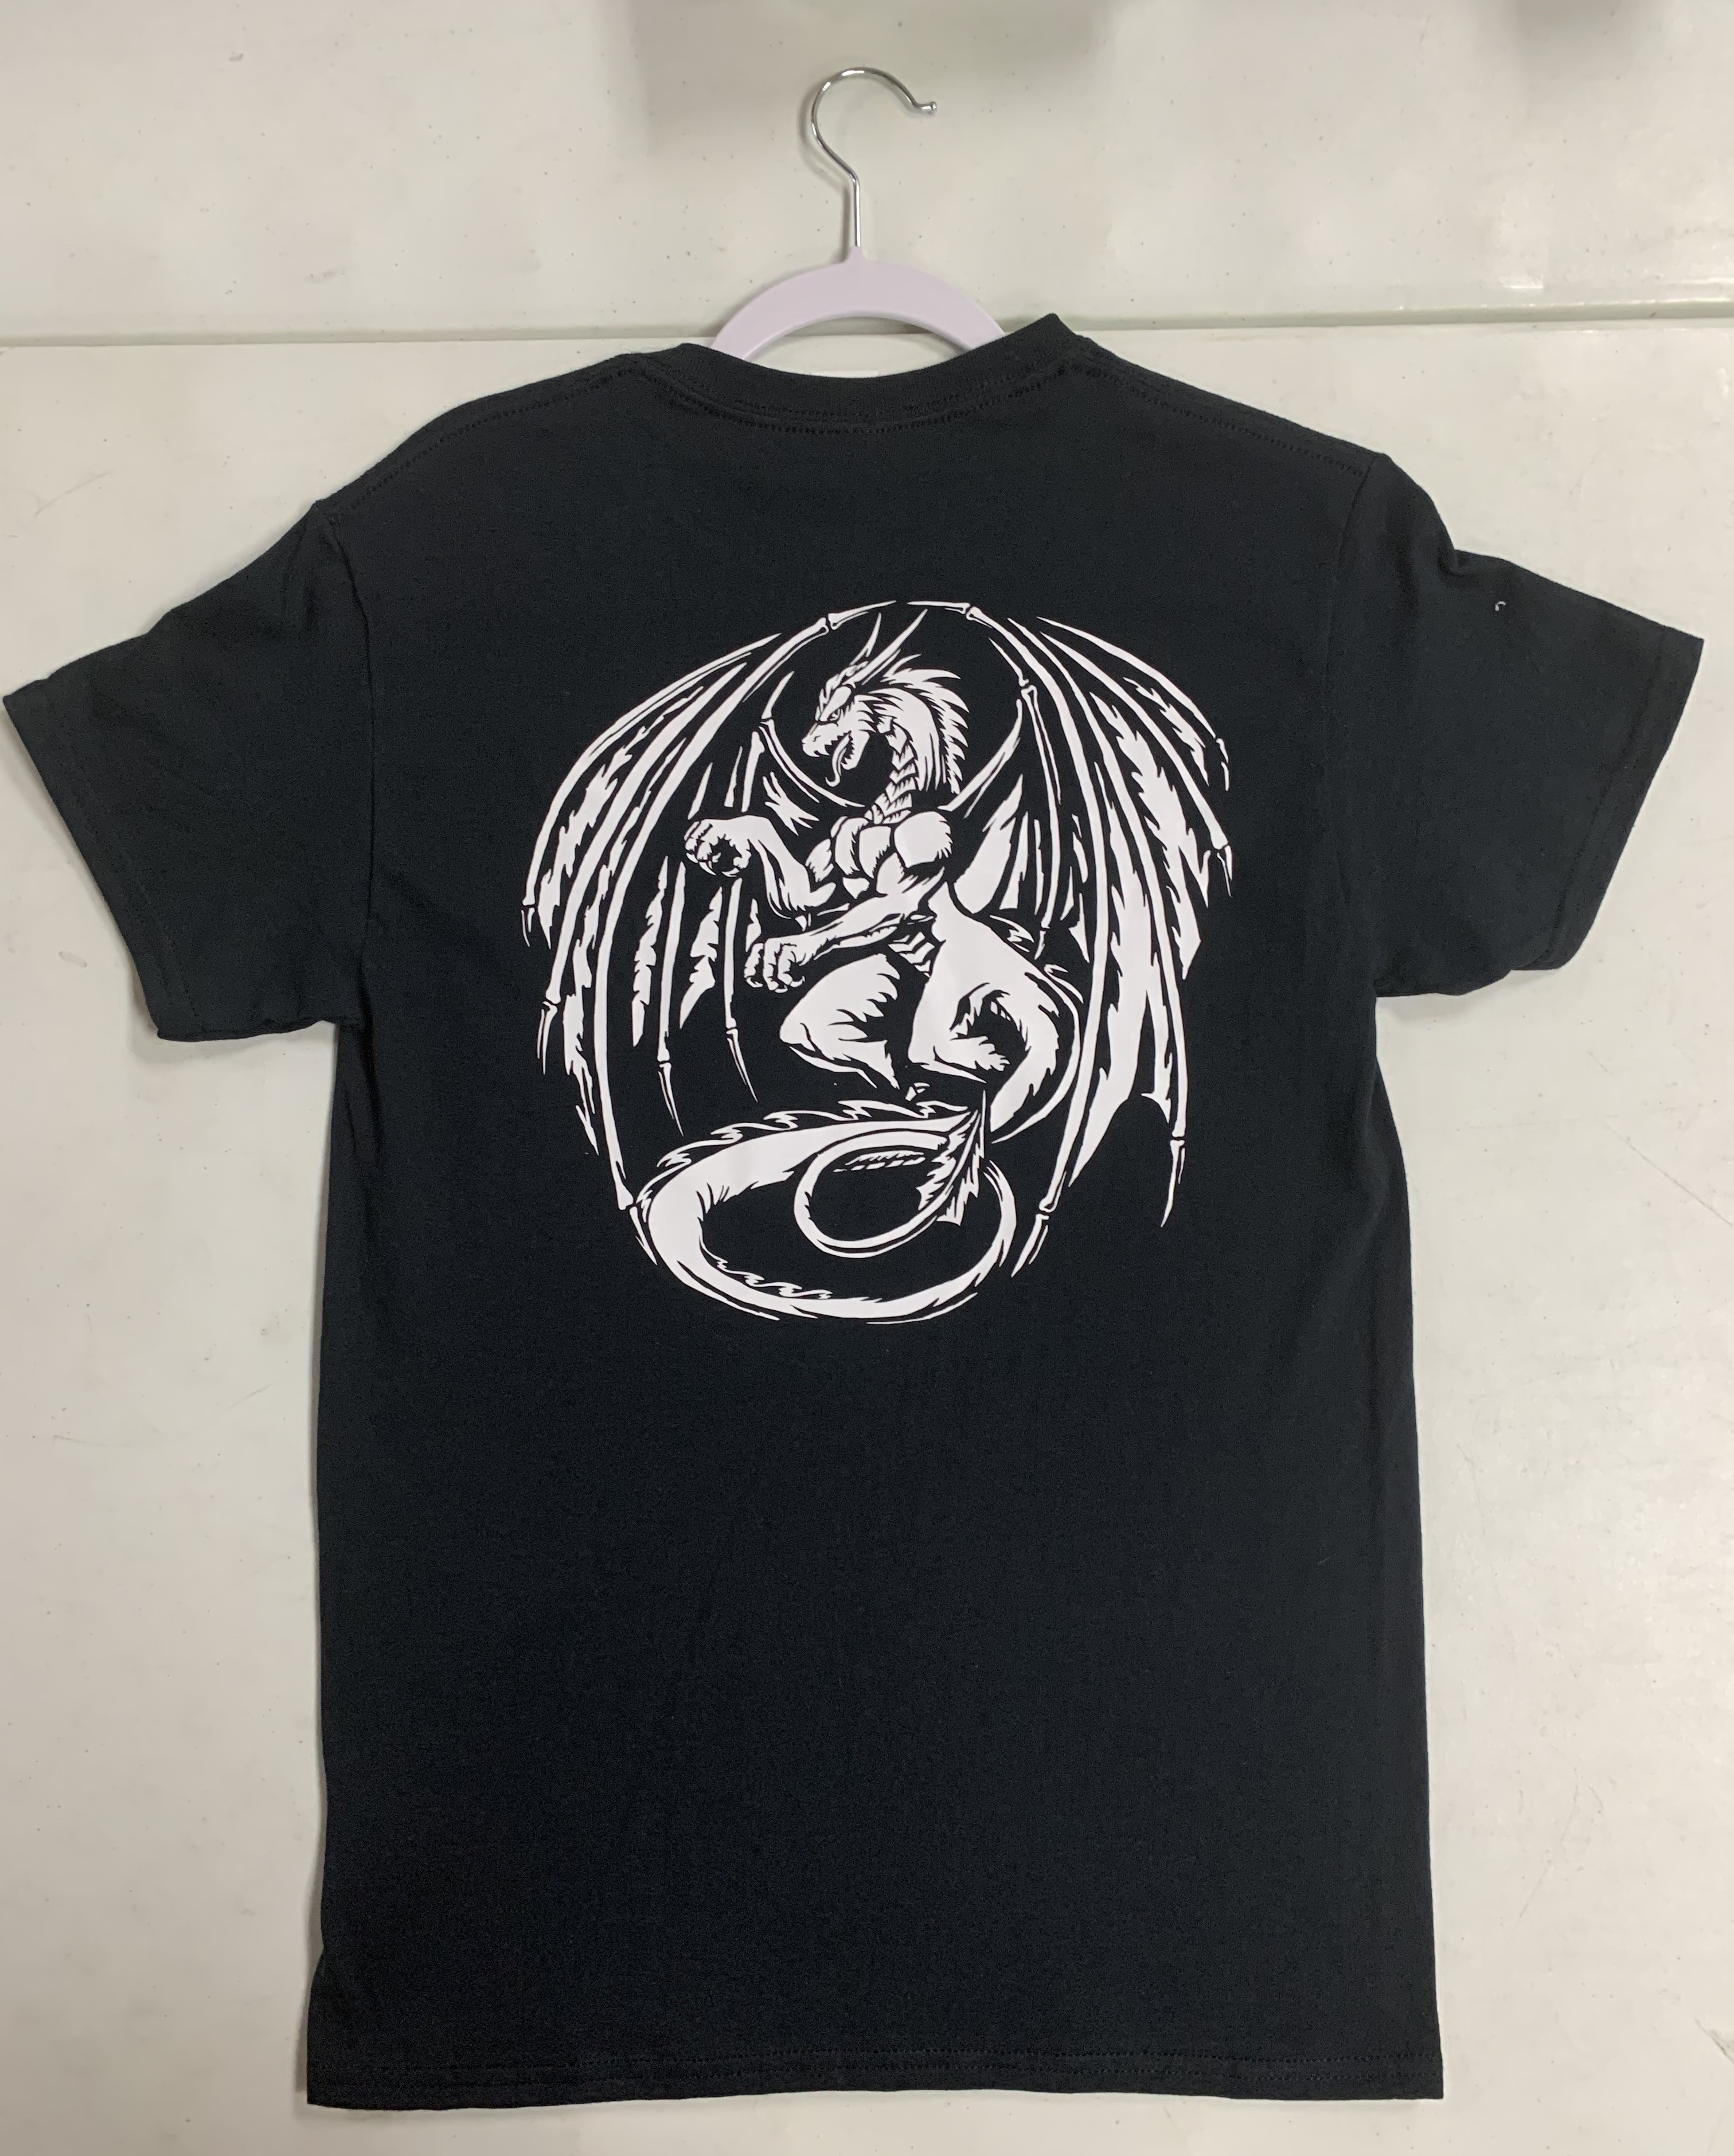 Excelsior Greenville Michigan/Dragon Black T-Shirt - XXXL